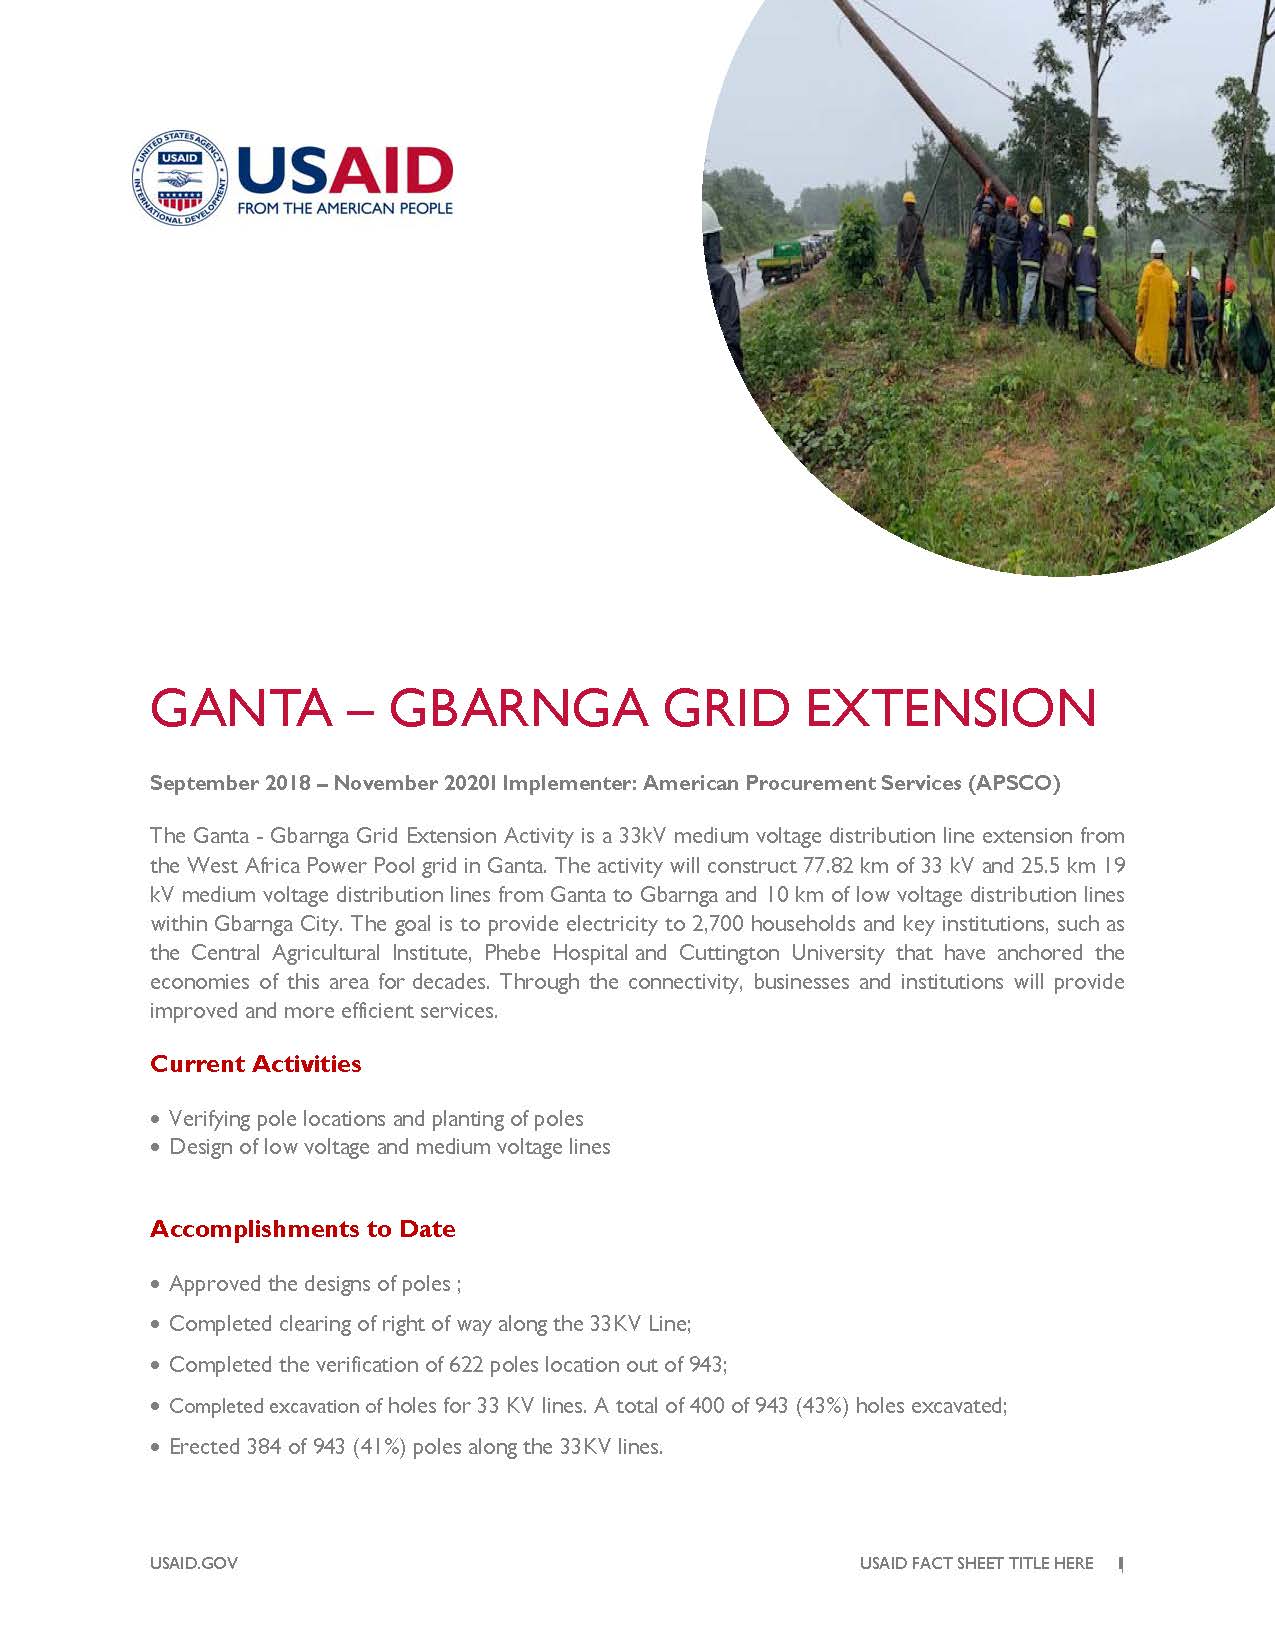 Ganta - Gbarnga Grid Extension Activity